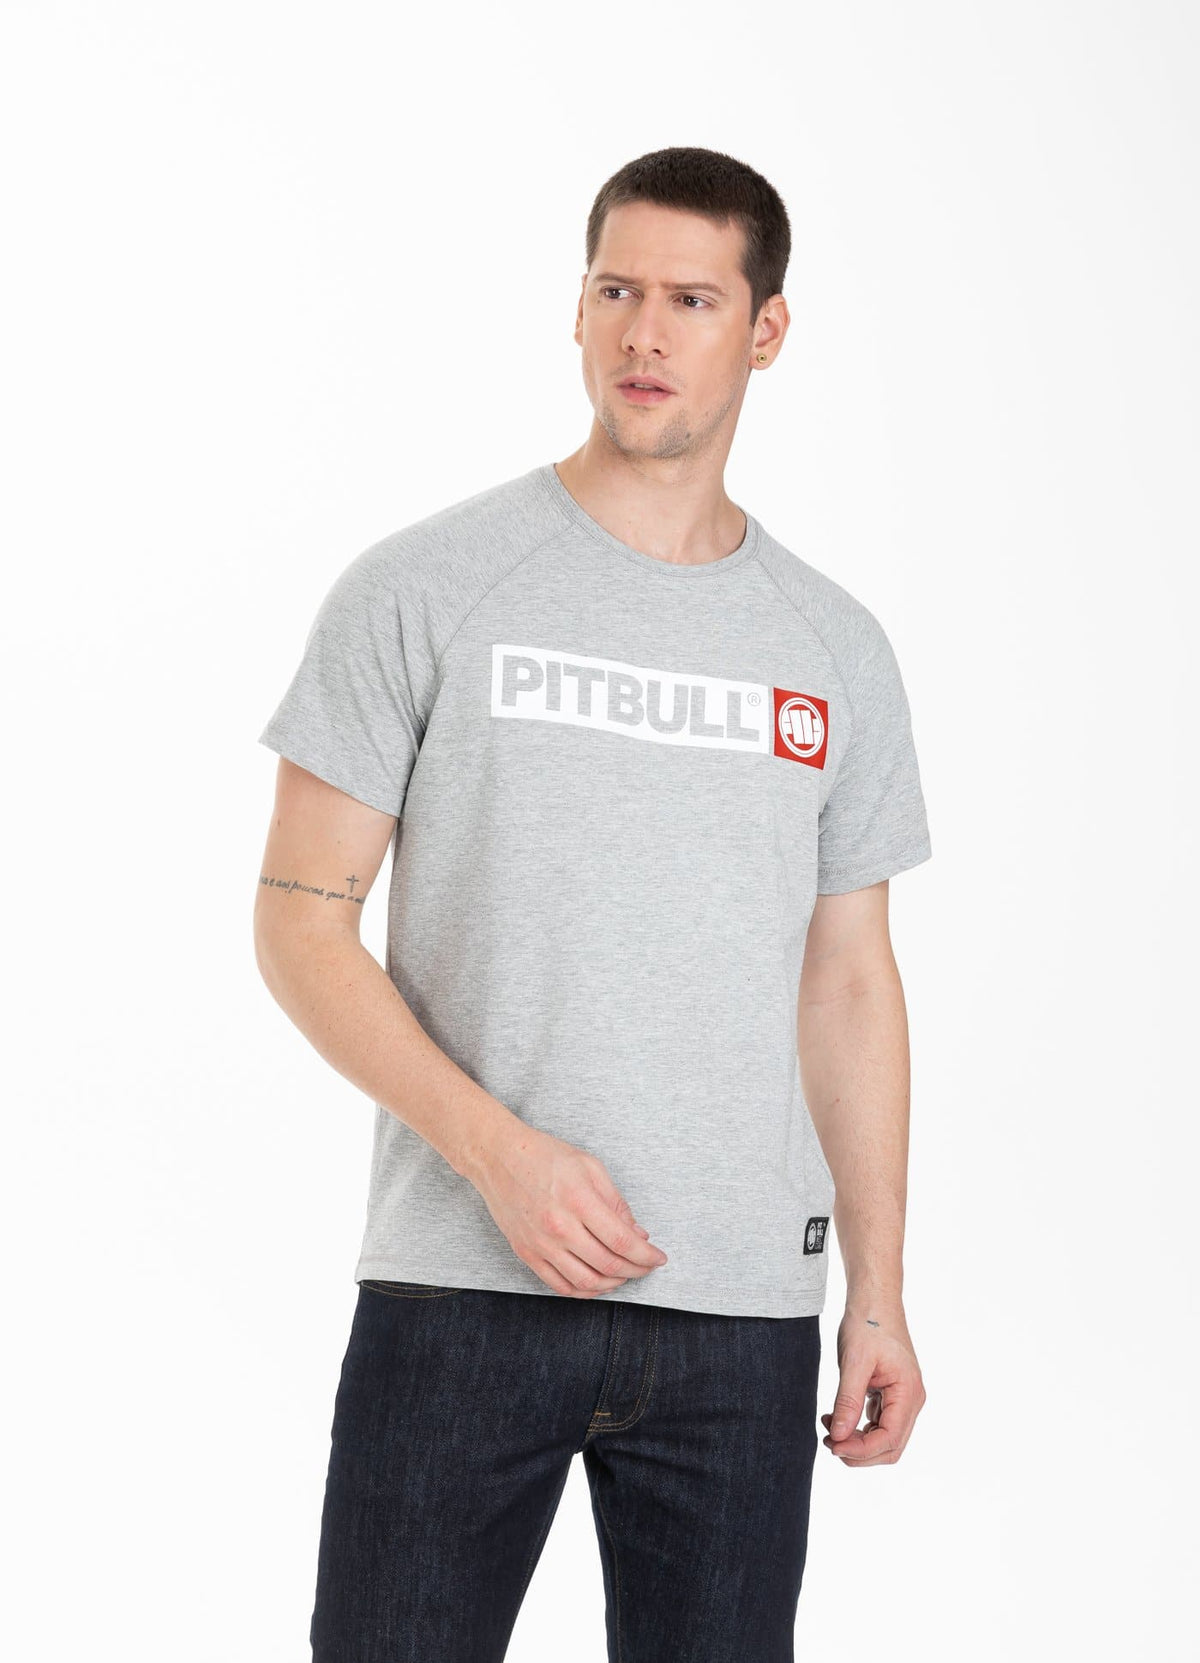 T-shirt Heavyweight Spandex HILLTOP Grey - Pitbull West Coast International Store 